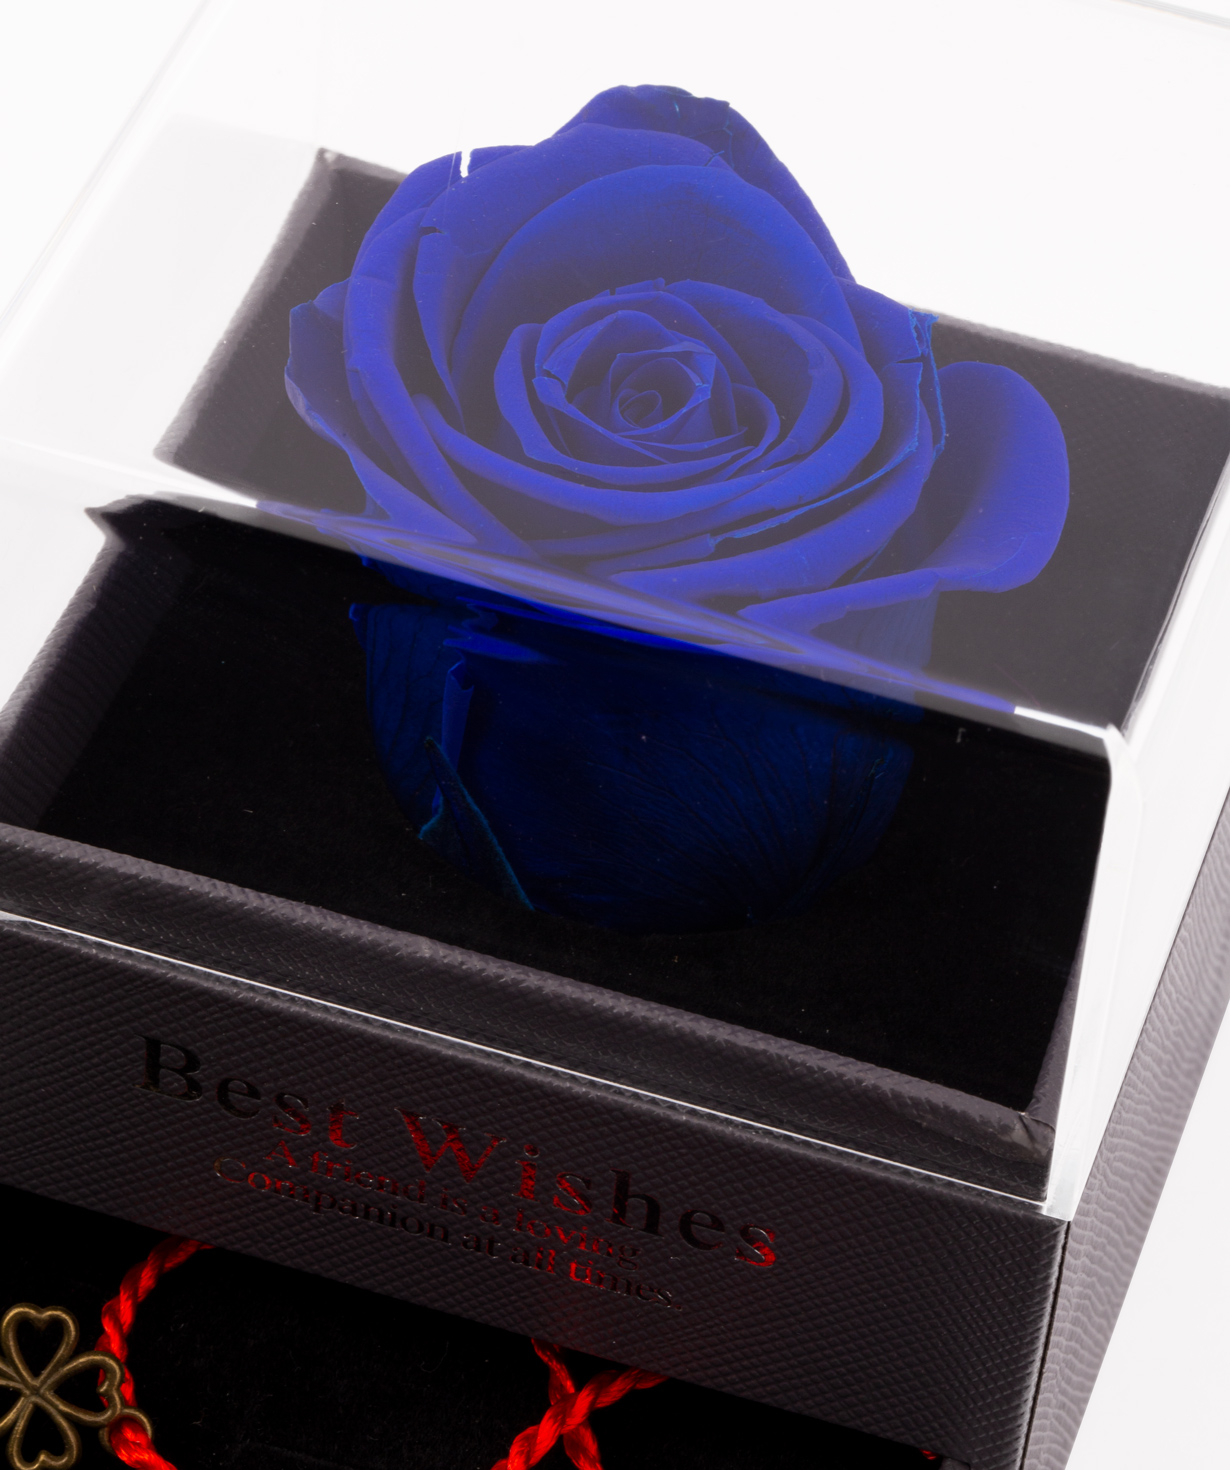 Rose `EM Flowers` eternal blue with a talisman